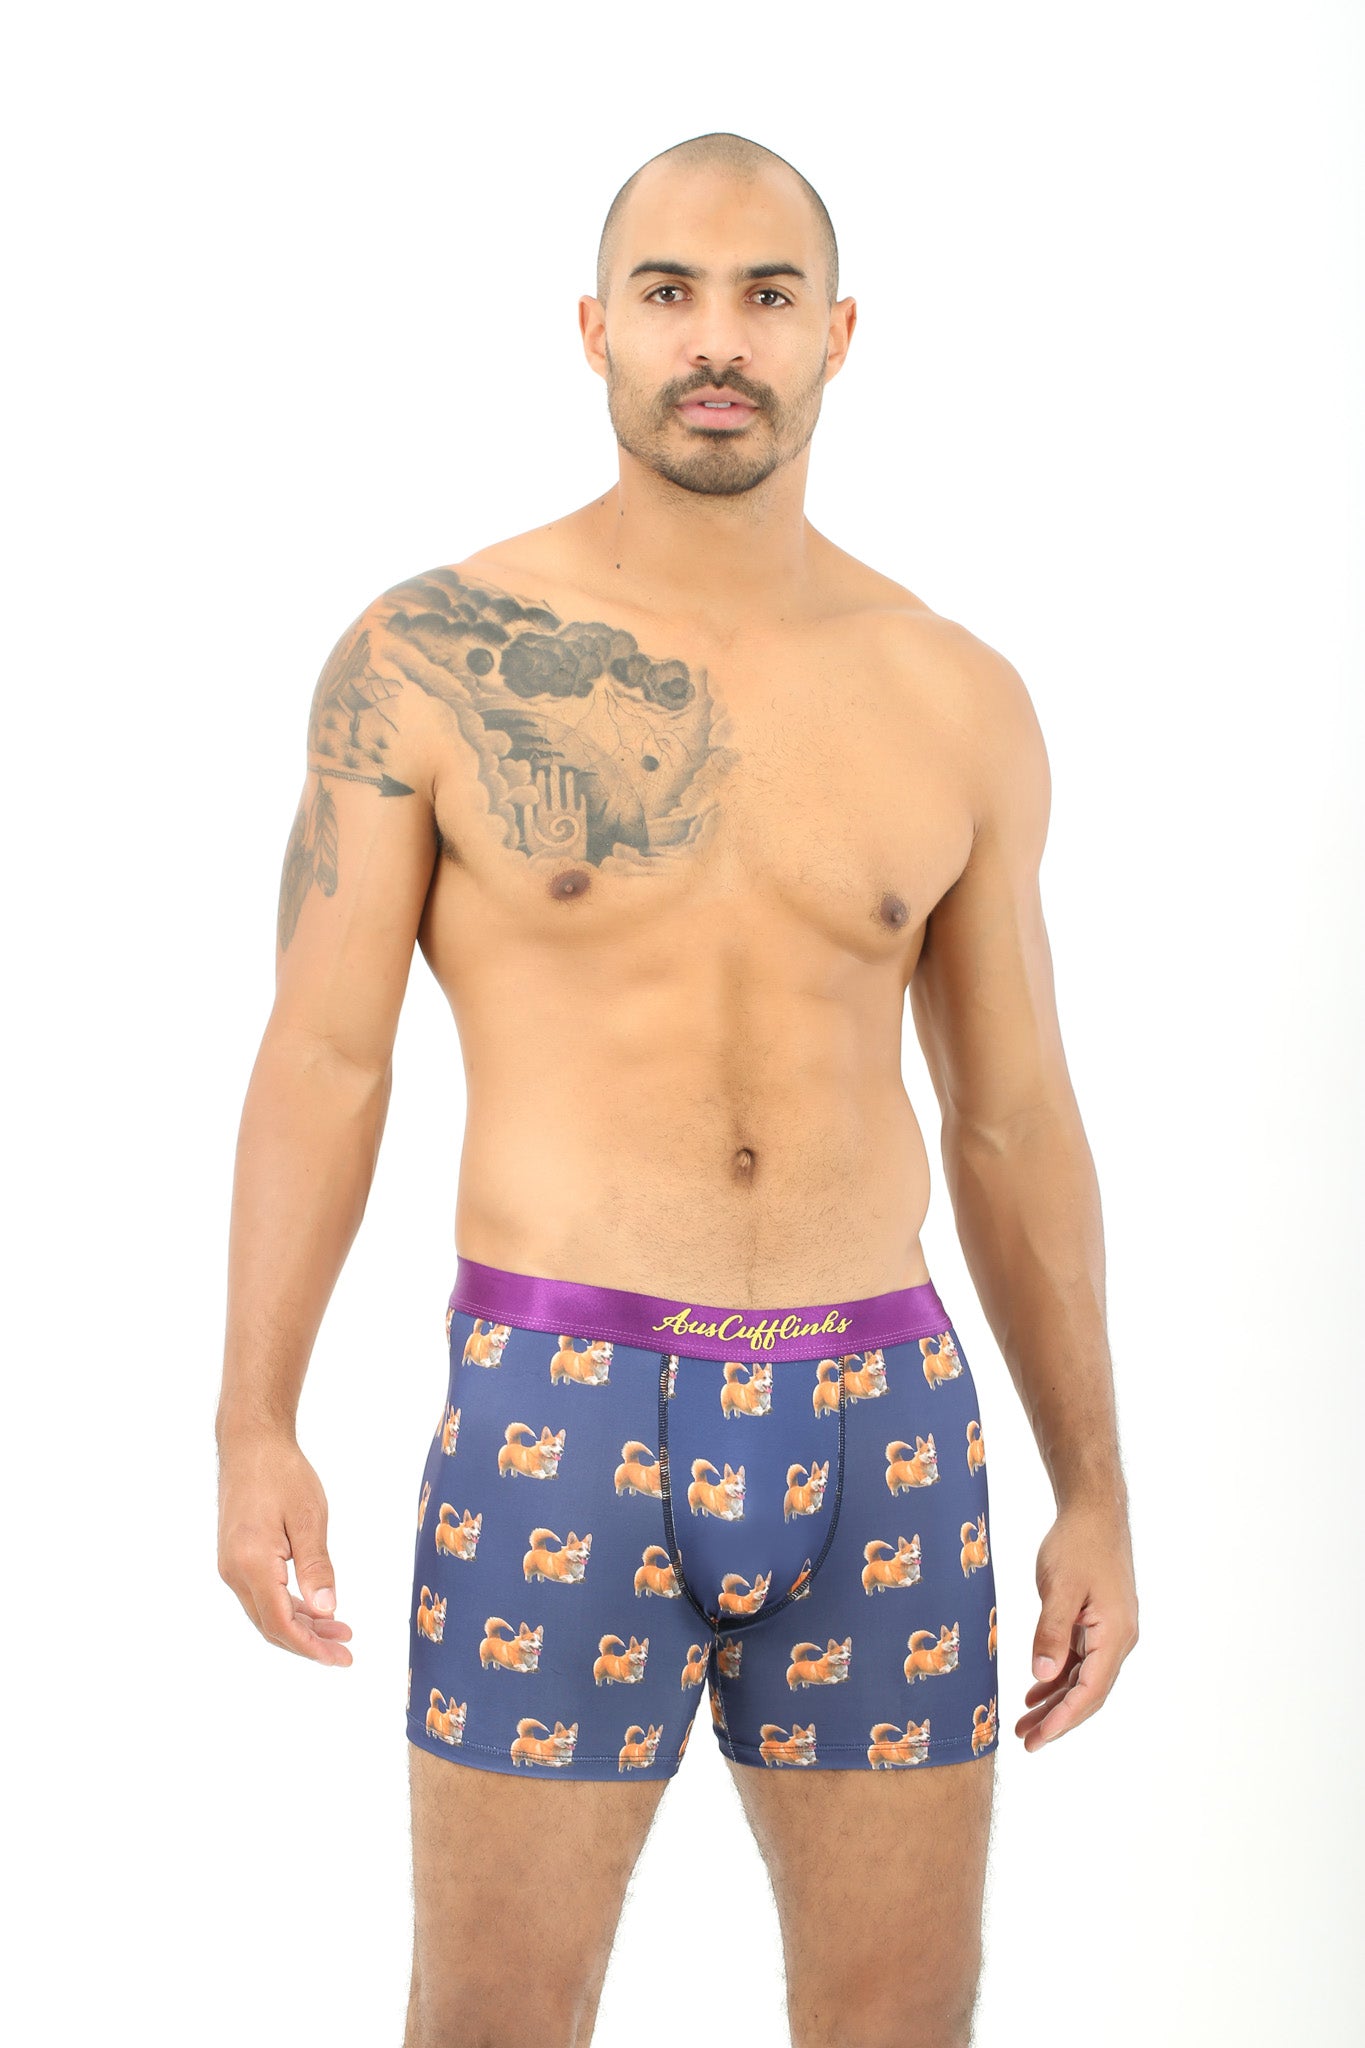 A man with tattoos wearing Corgi Dog Underwear.